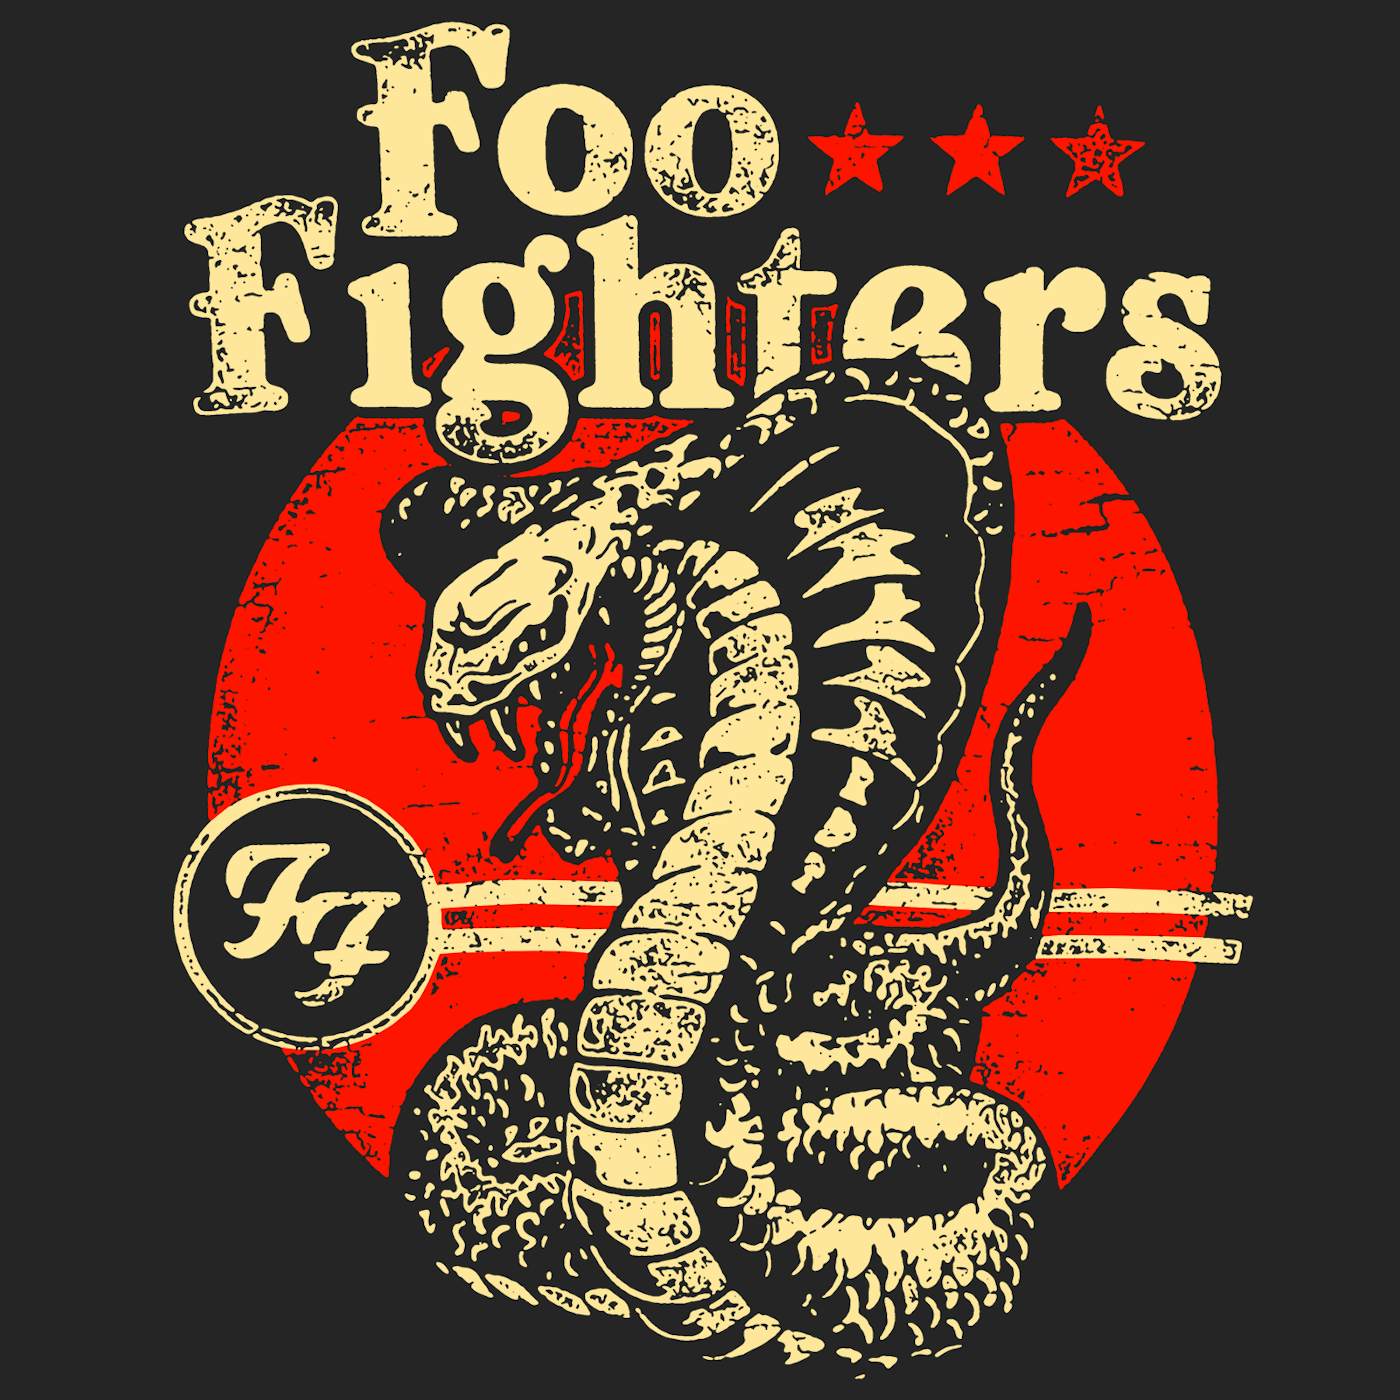 Foo Fighters T-Shirt | Cobra Logo Foo Fighters Shirt